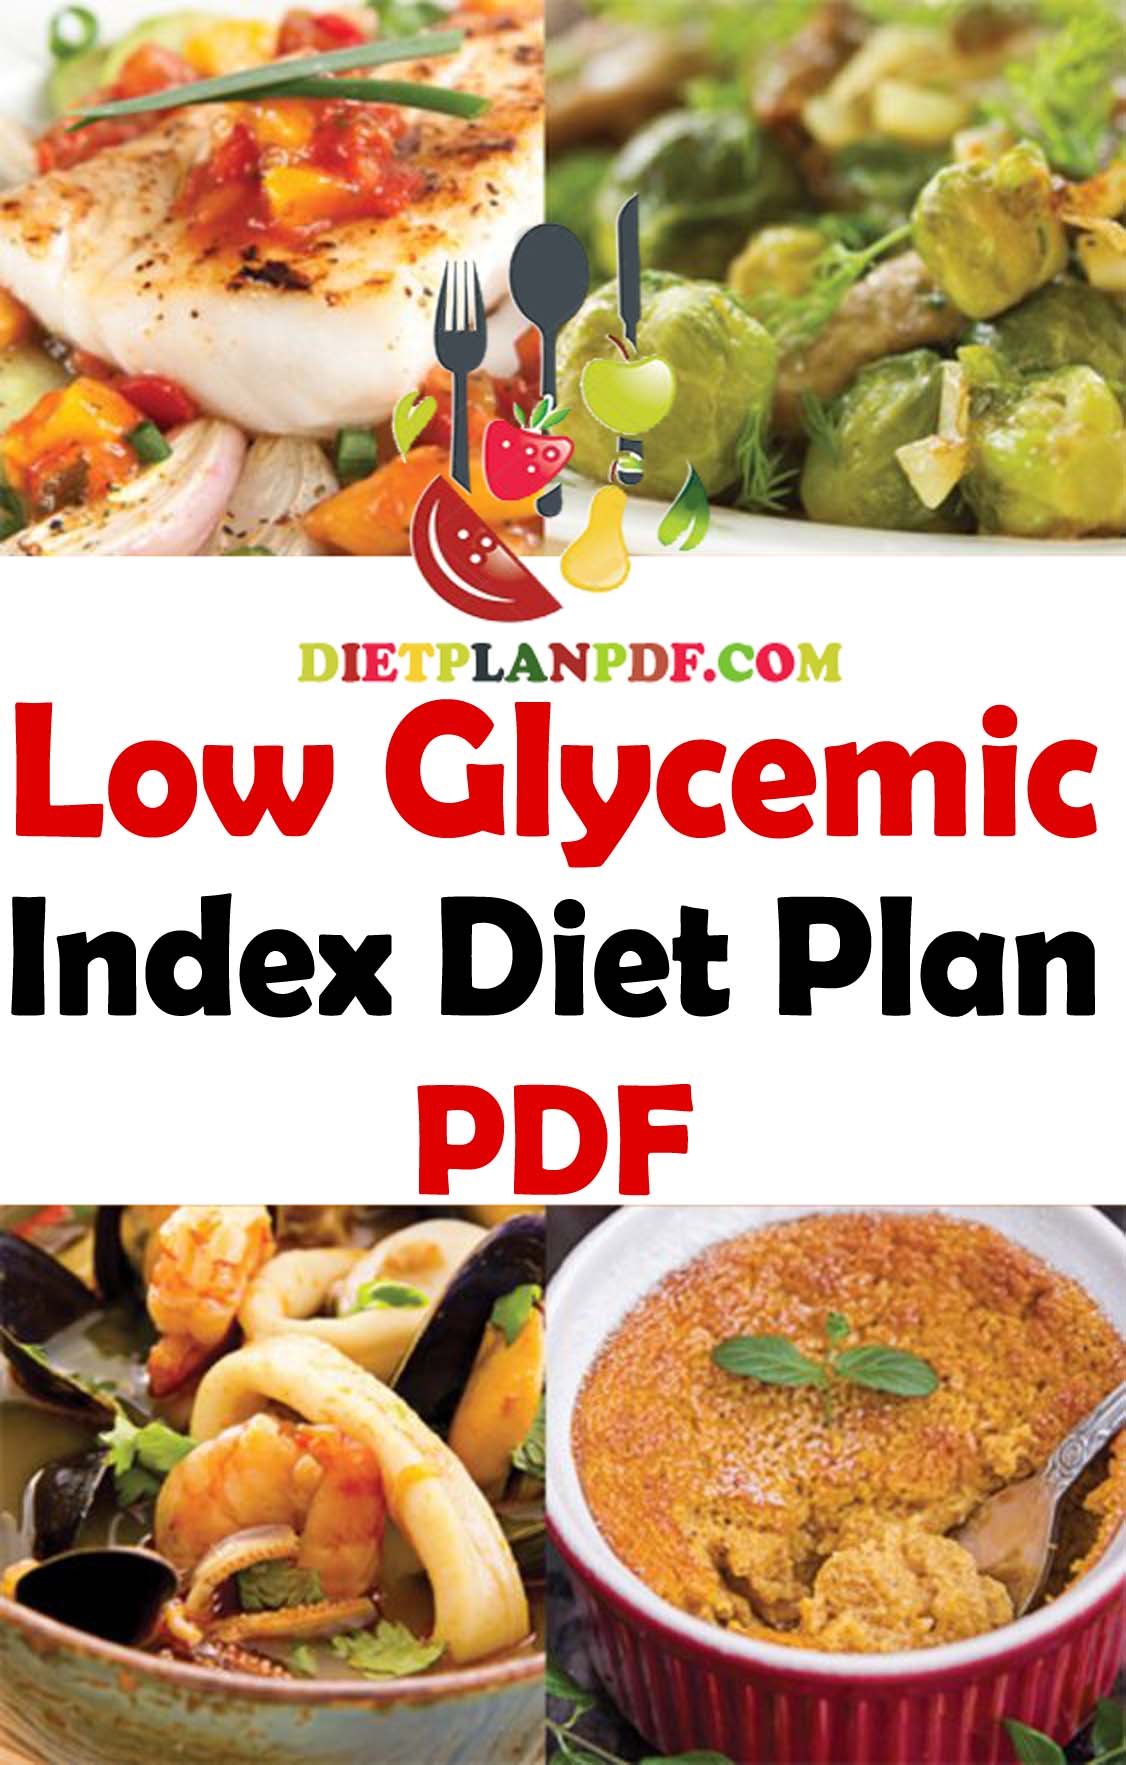 Low Glycemic Index Diet Meal Plan PDF